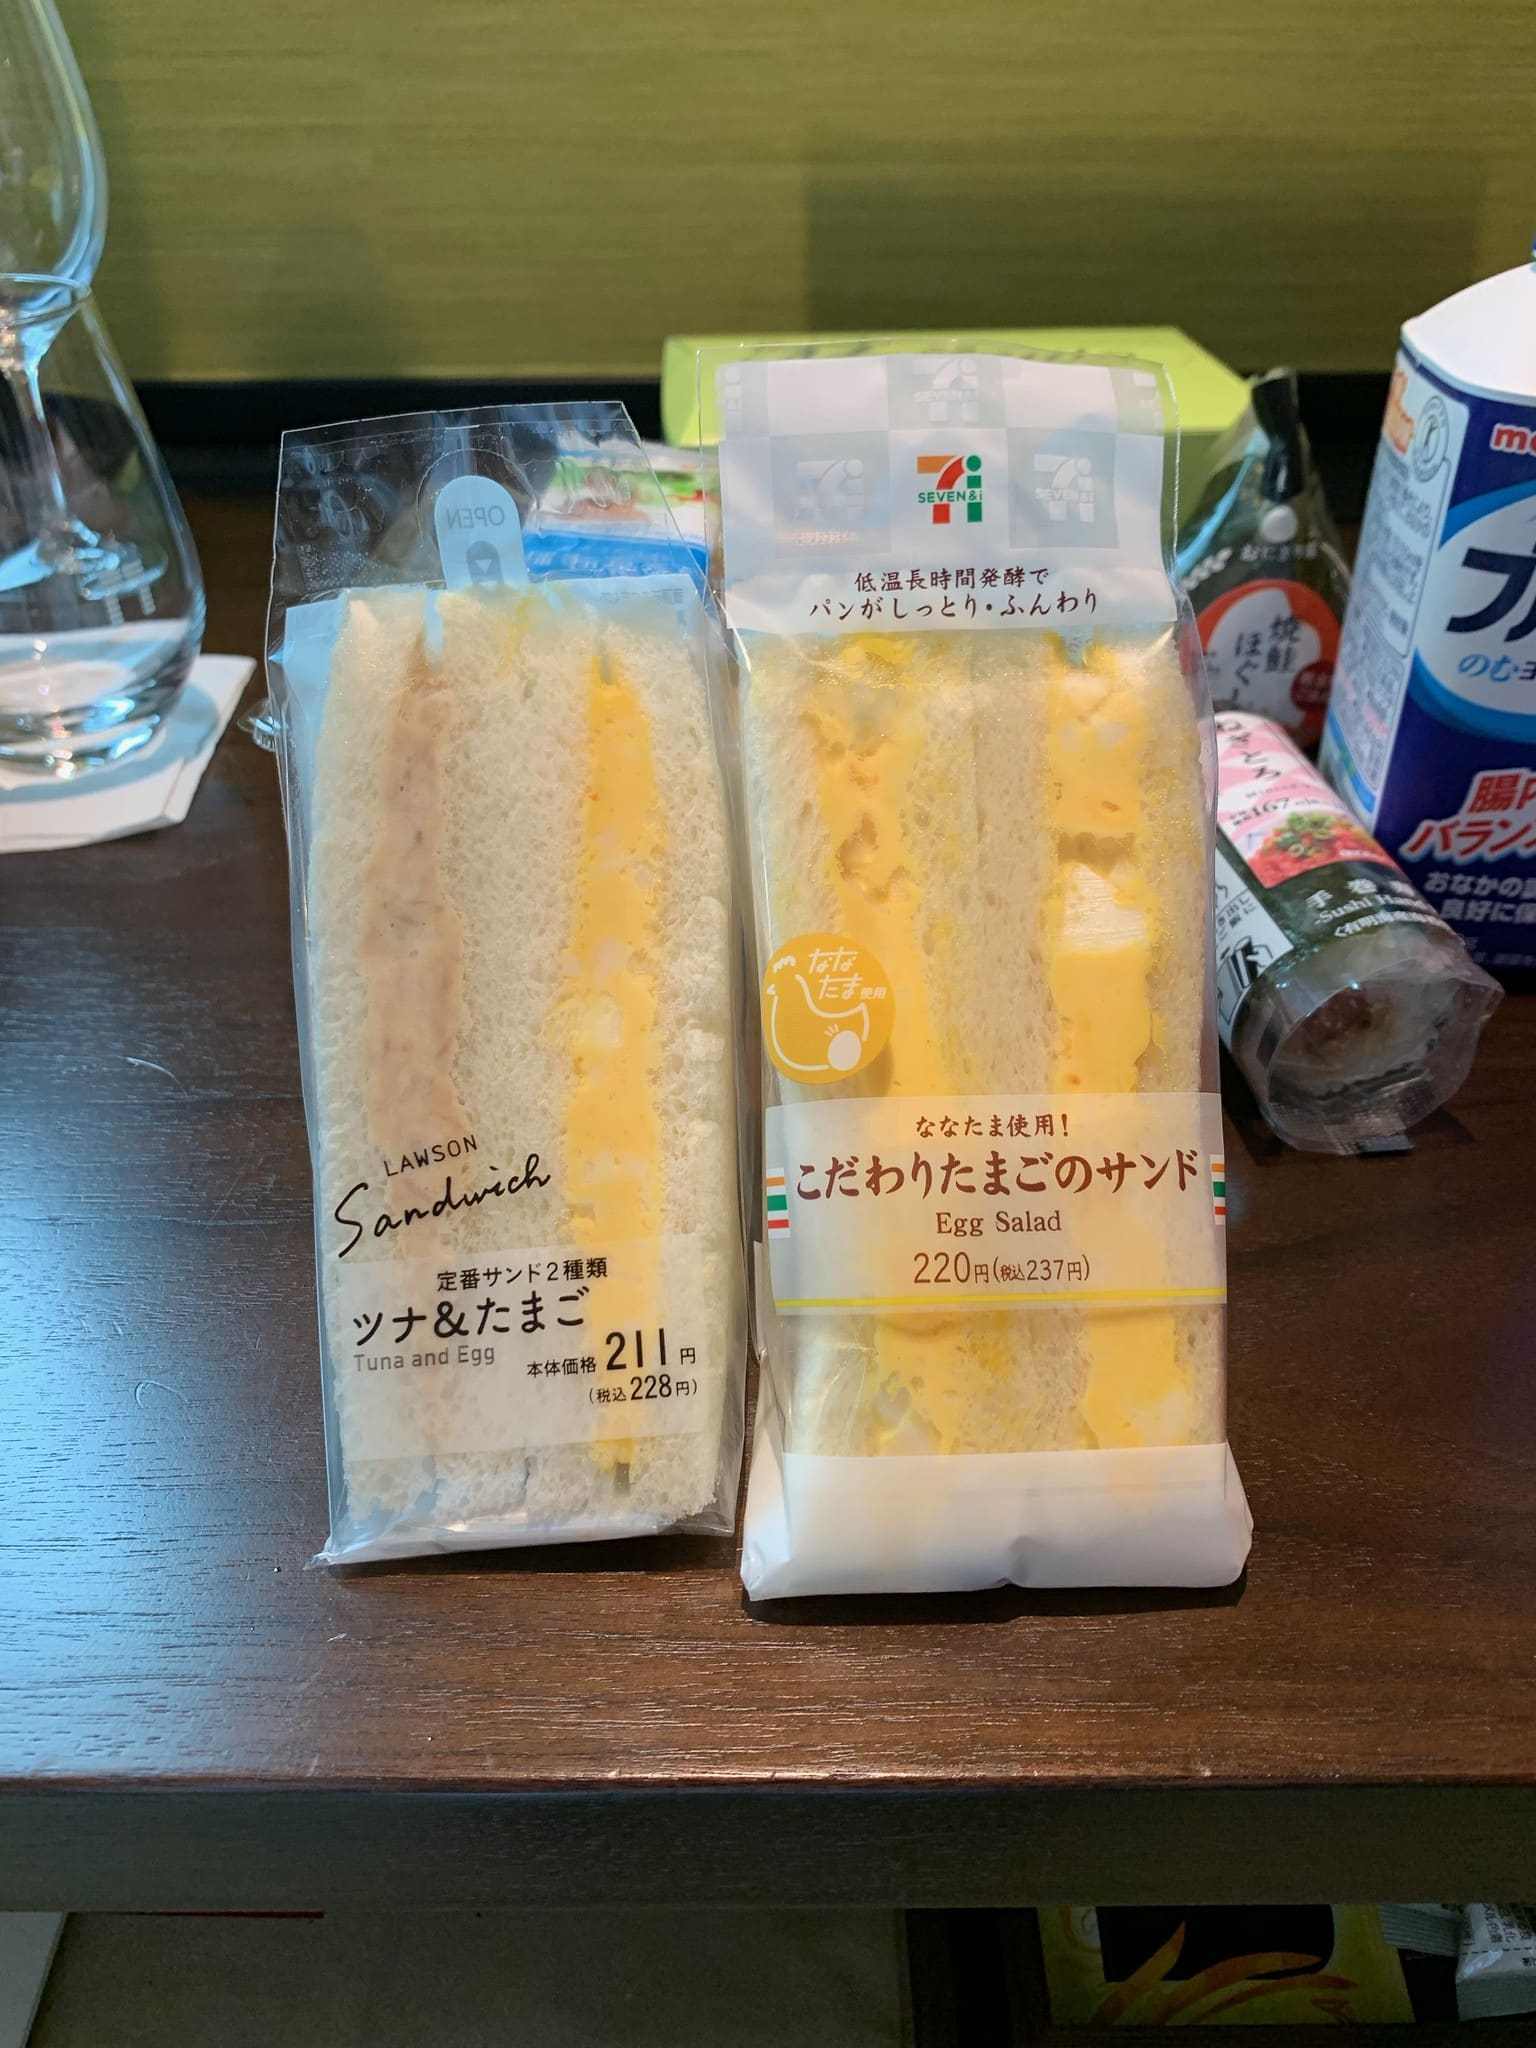 Japanese Sandwiches